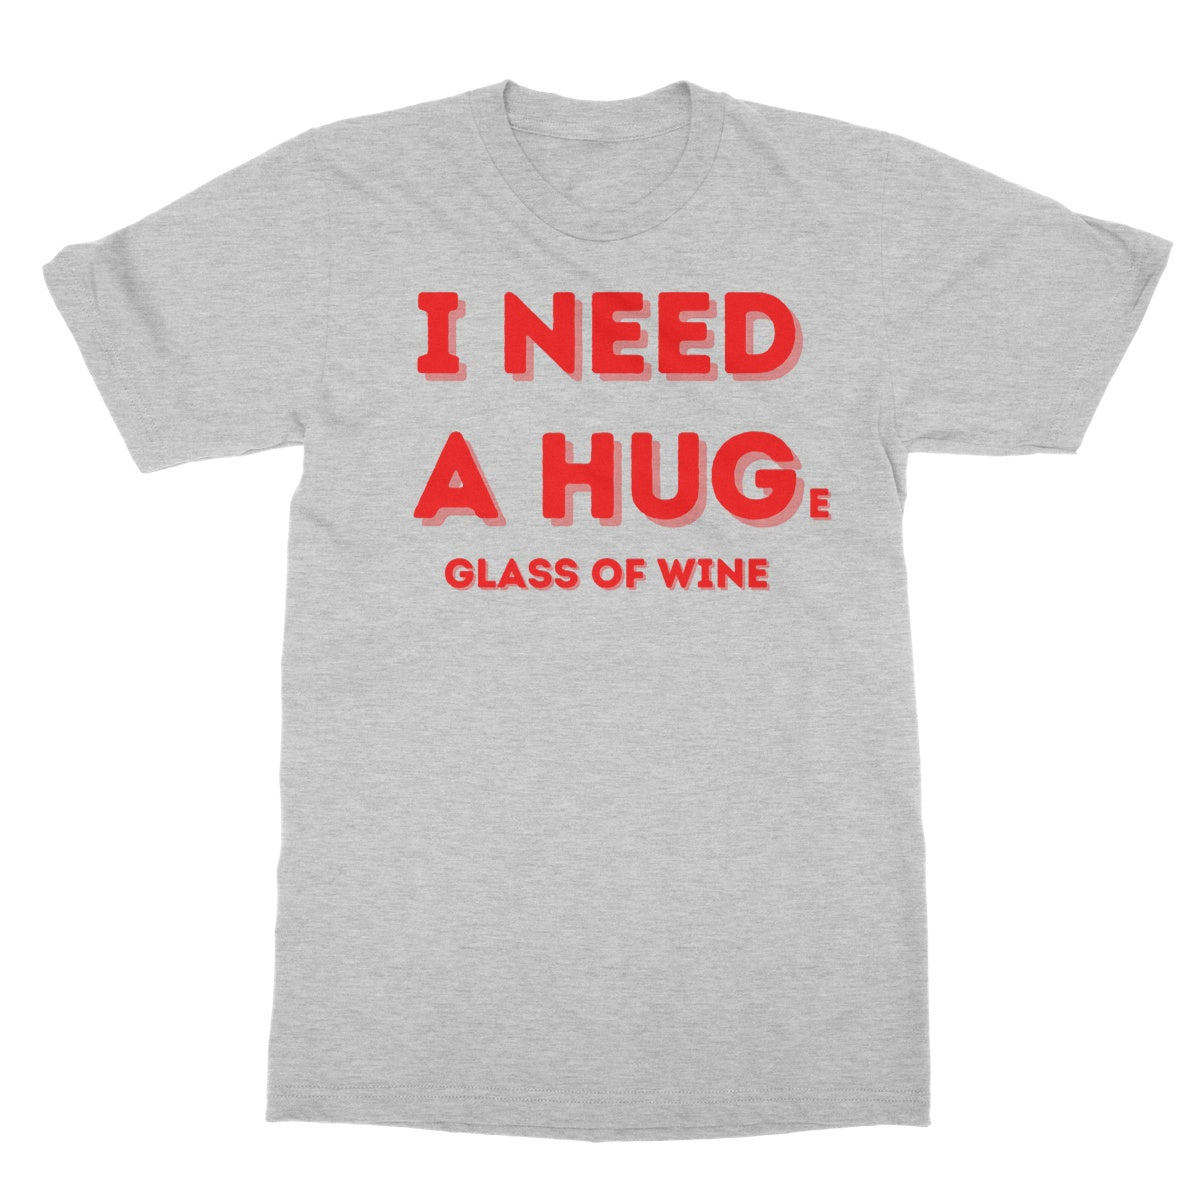 I need a huge glass of wine t shirt grey